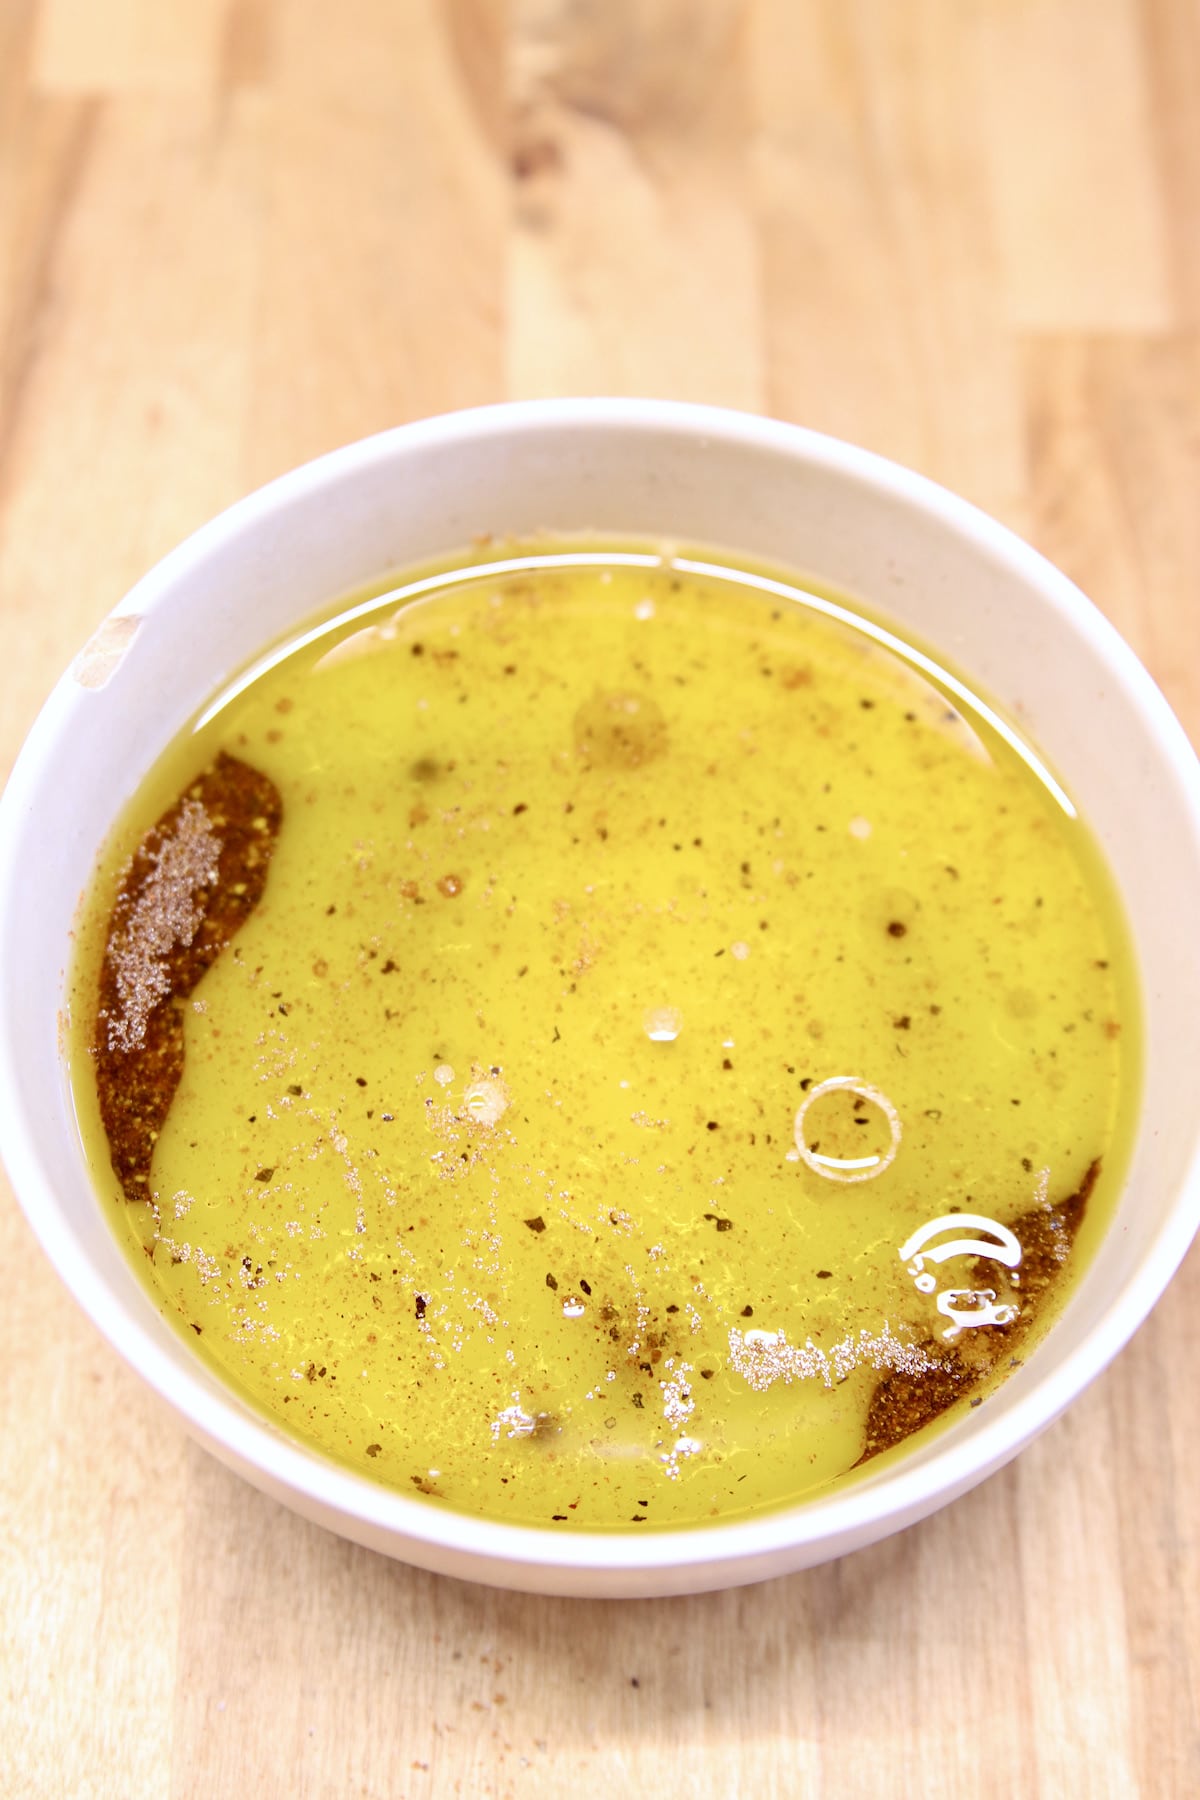 Orange juice and olive oil added to fajita seasoning.